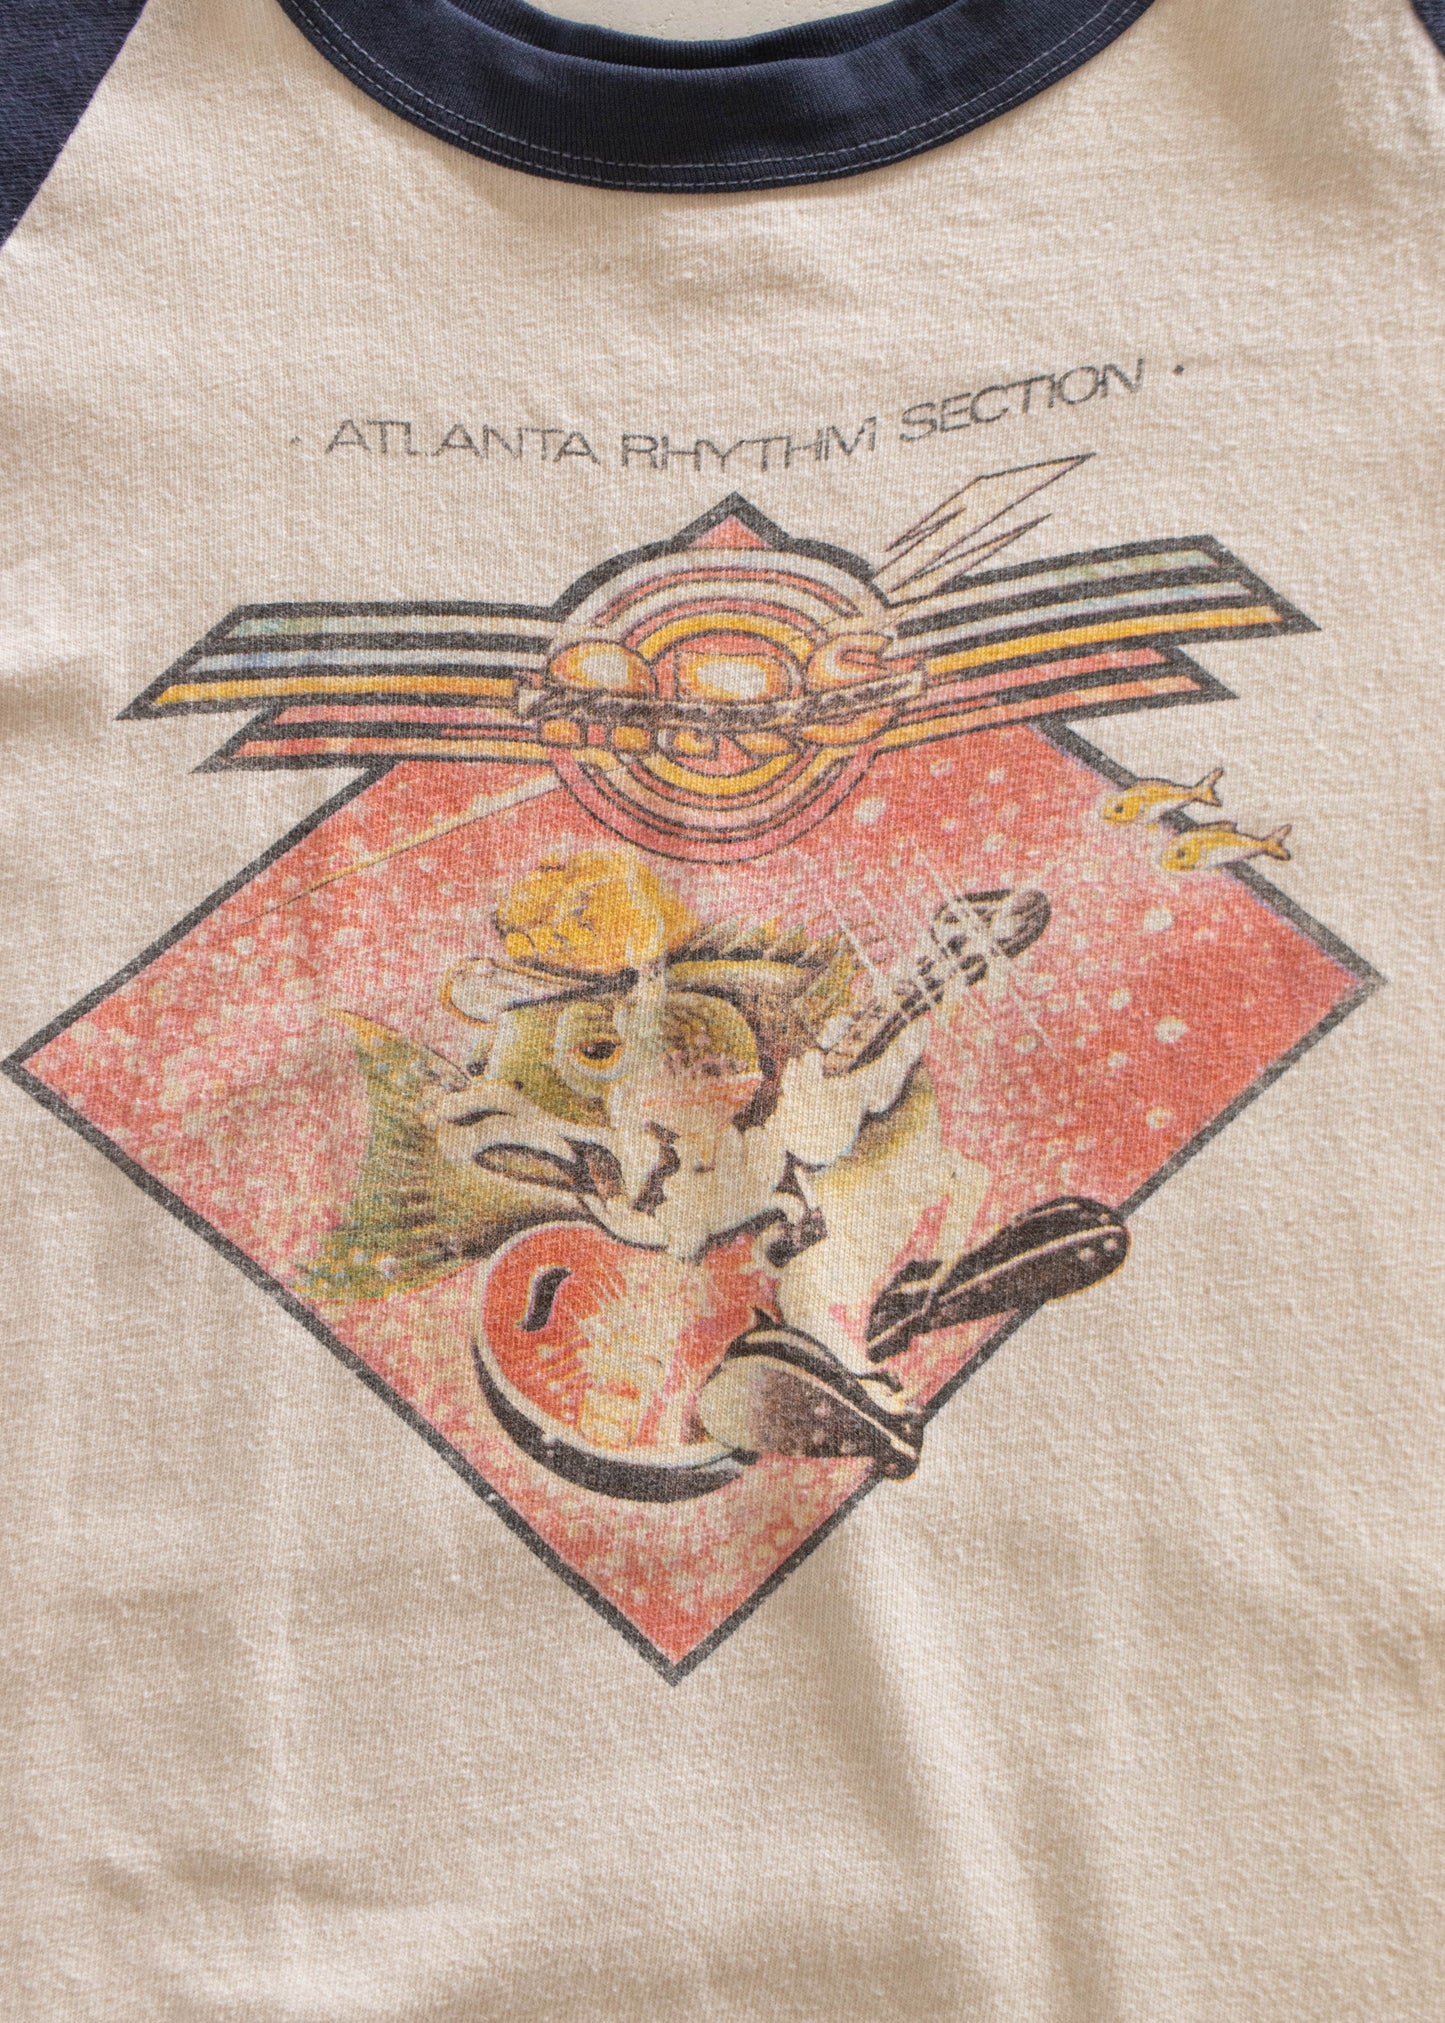 1970s Atlanta Rhythm Section Champagne Jam Baseball T-Shirt Size M/L